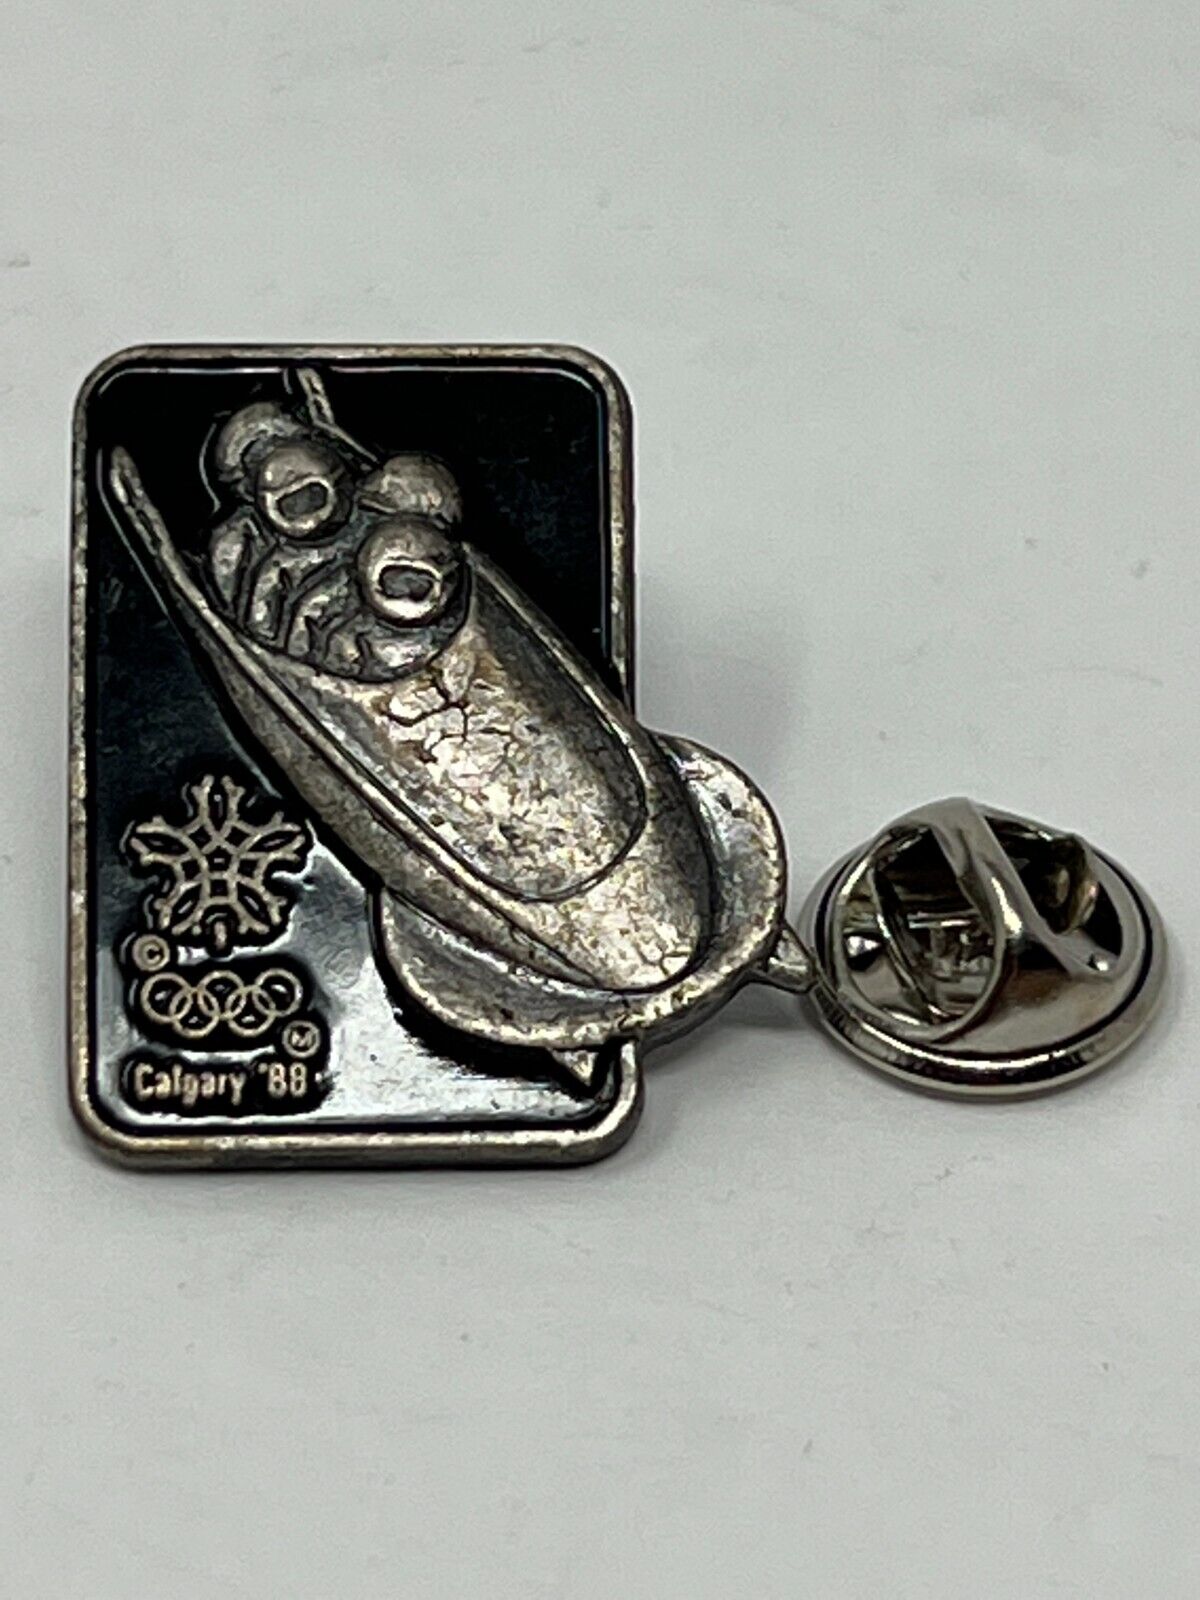 1988 Calgary Winter Games Bobsleigh Olympics Lapel Pin